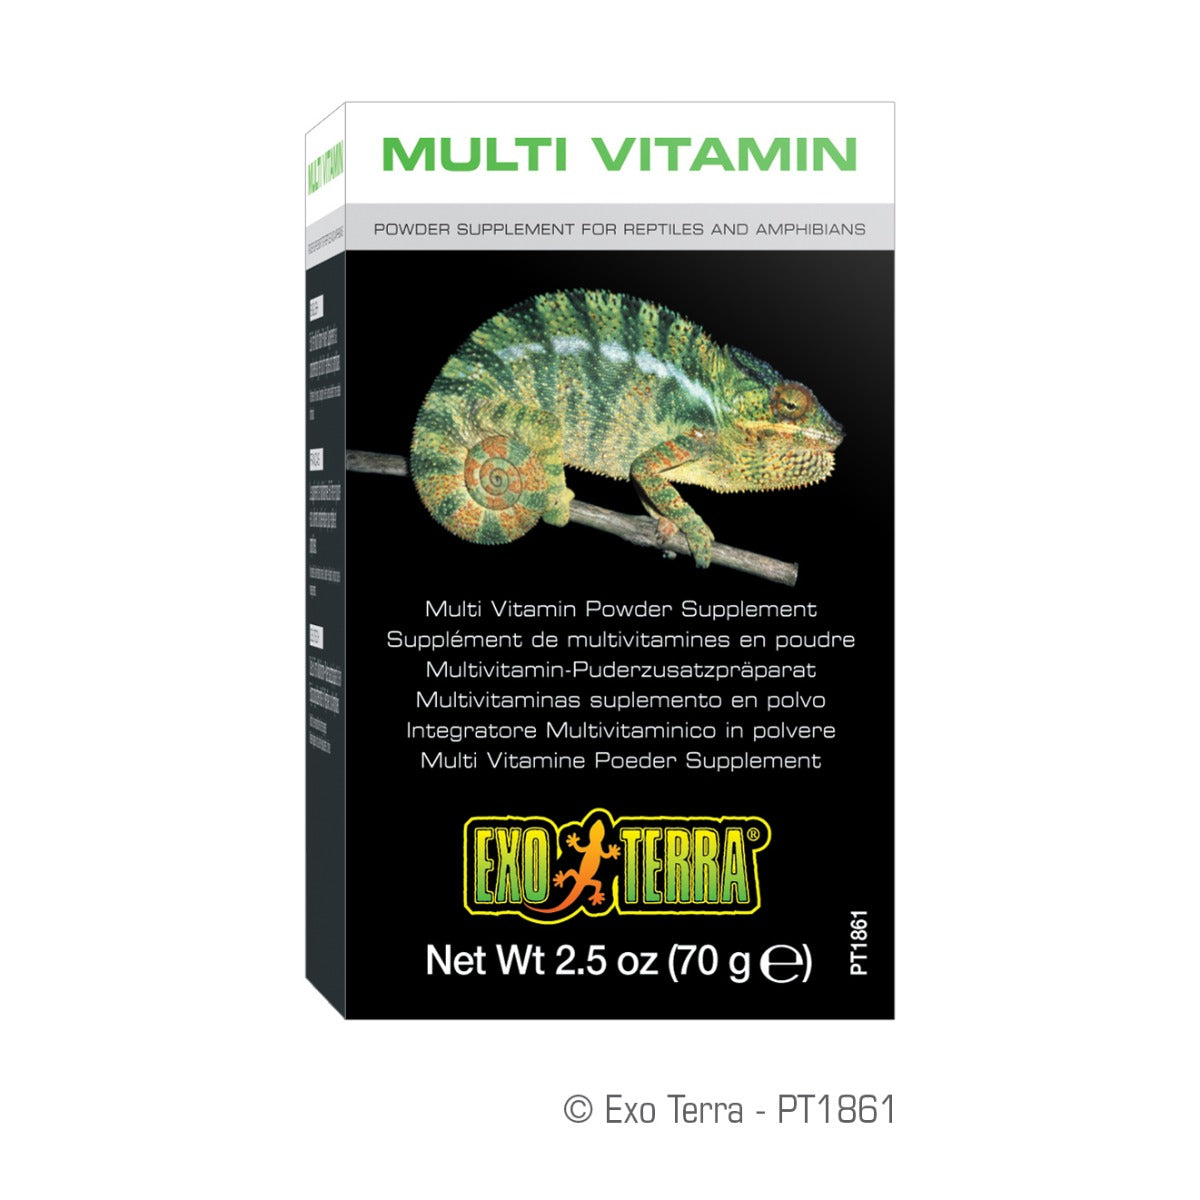 Exo Terra Multi Vitamin Powder Supplement - 2.5 oz - 70 g